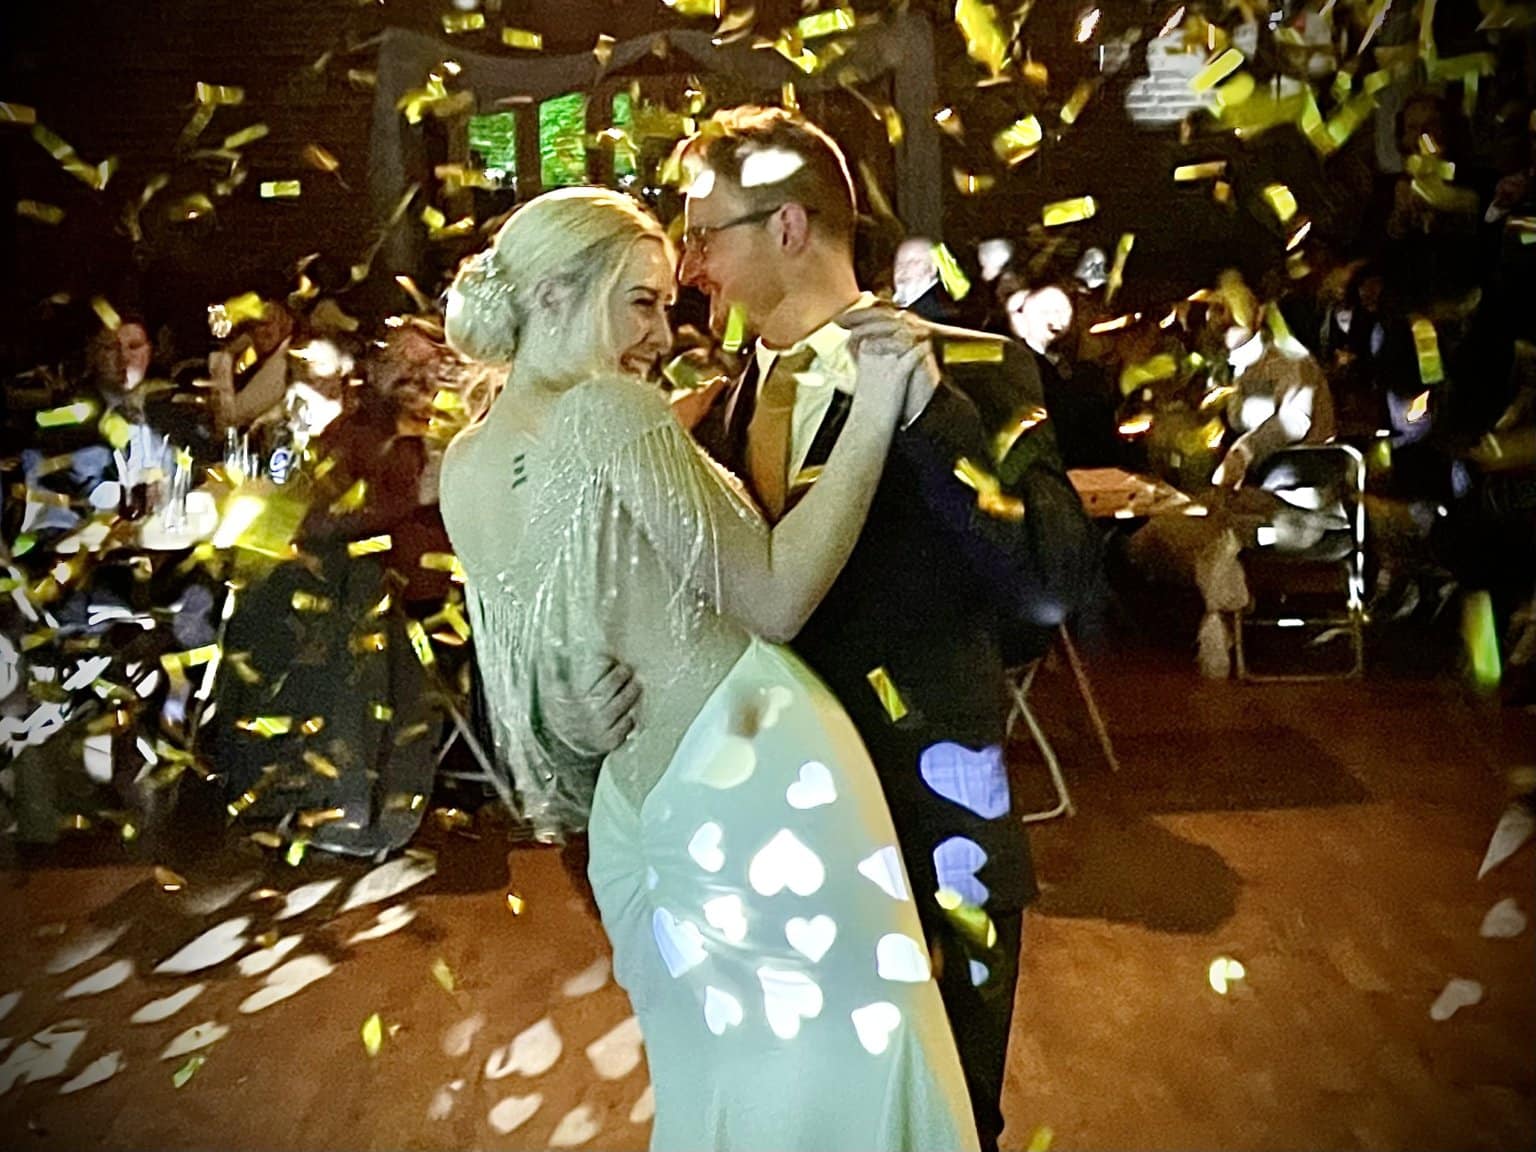 Confetti cannons - Wedding receptions Confetti canonns makes the perfect first dance